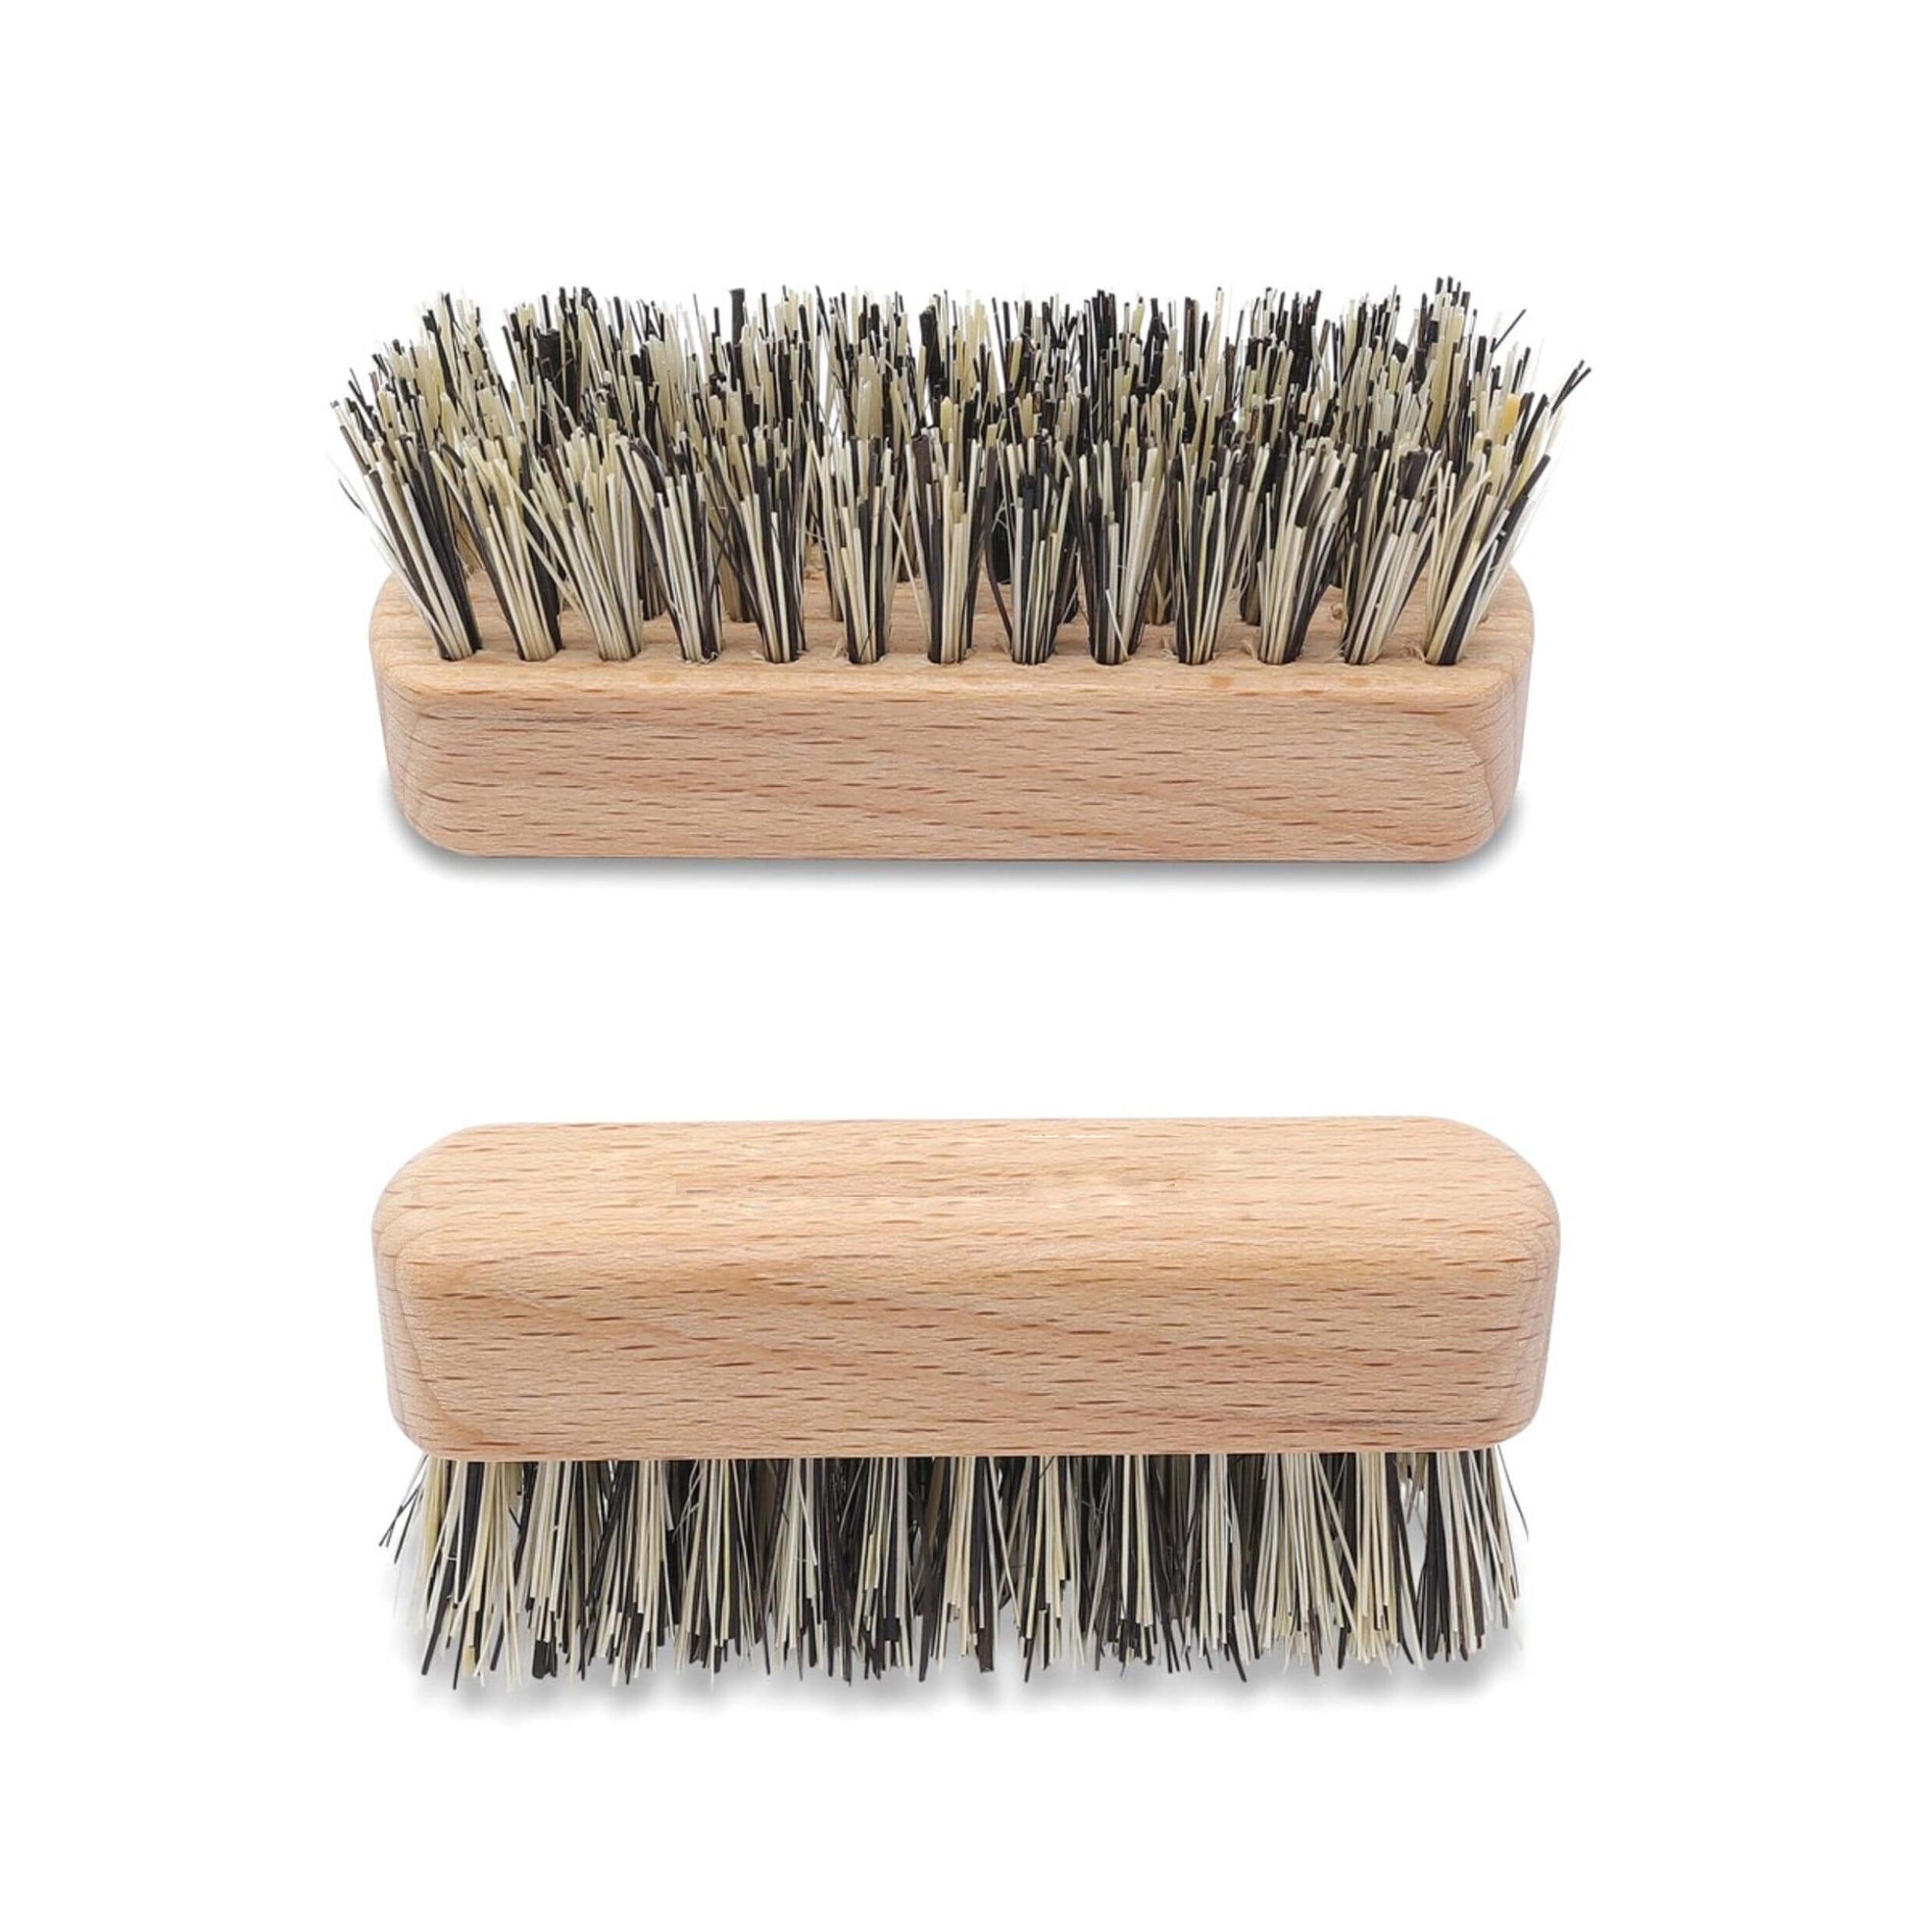 Beard brush beech wood with vegan trim - Unik by Nature